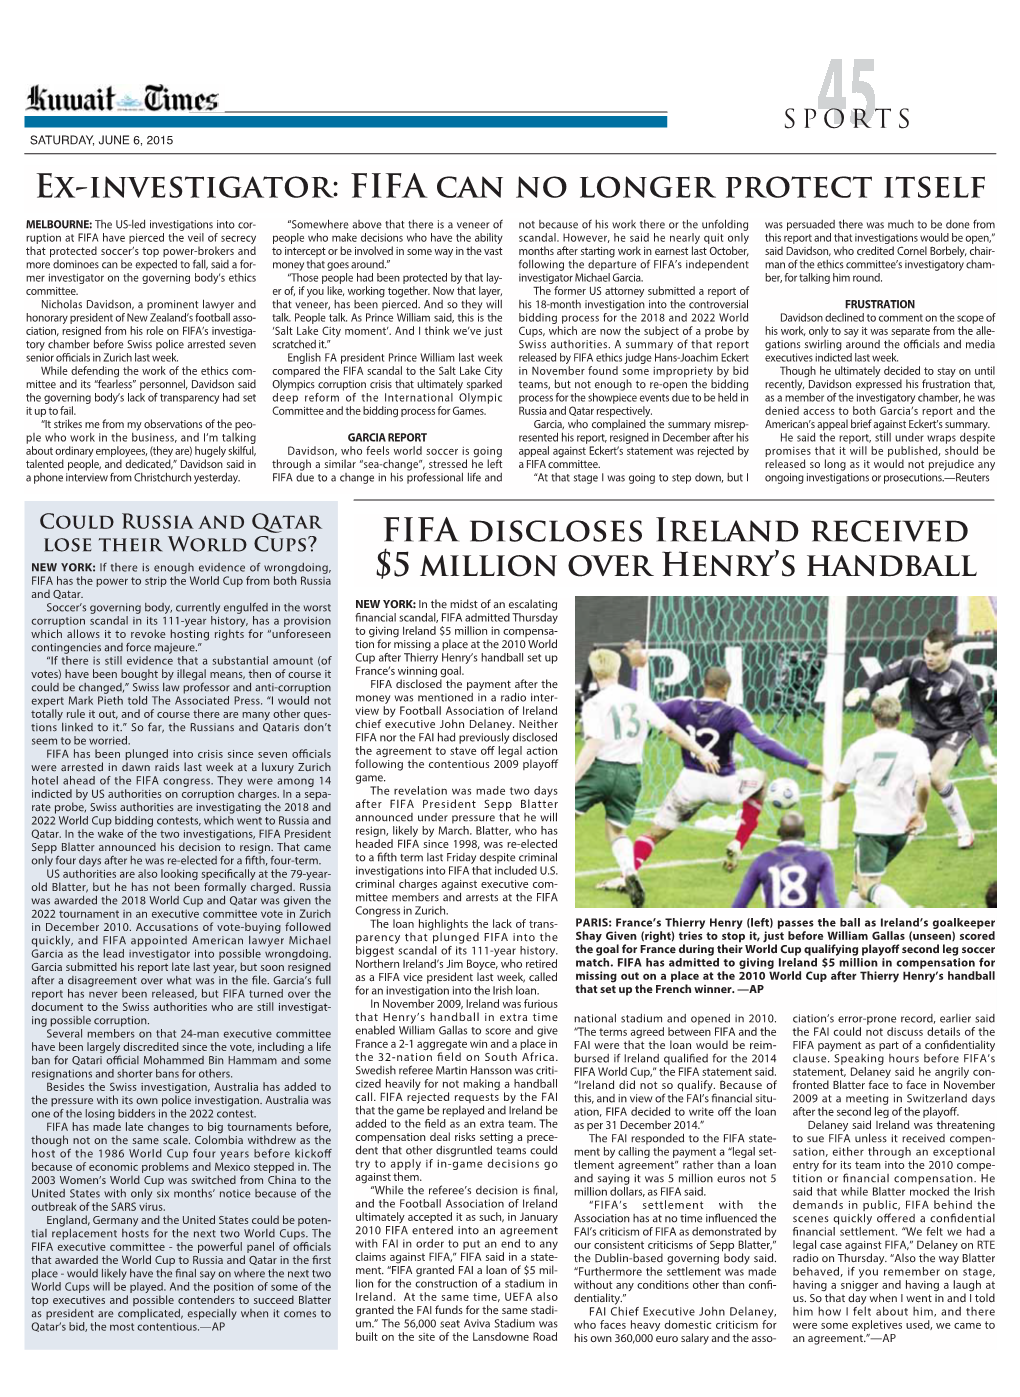 Ex-Investigator: FIFA Can No Longer Protect Itself FIFA Discloses Ireland